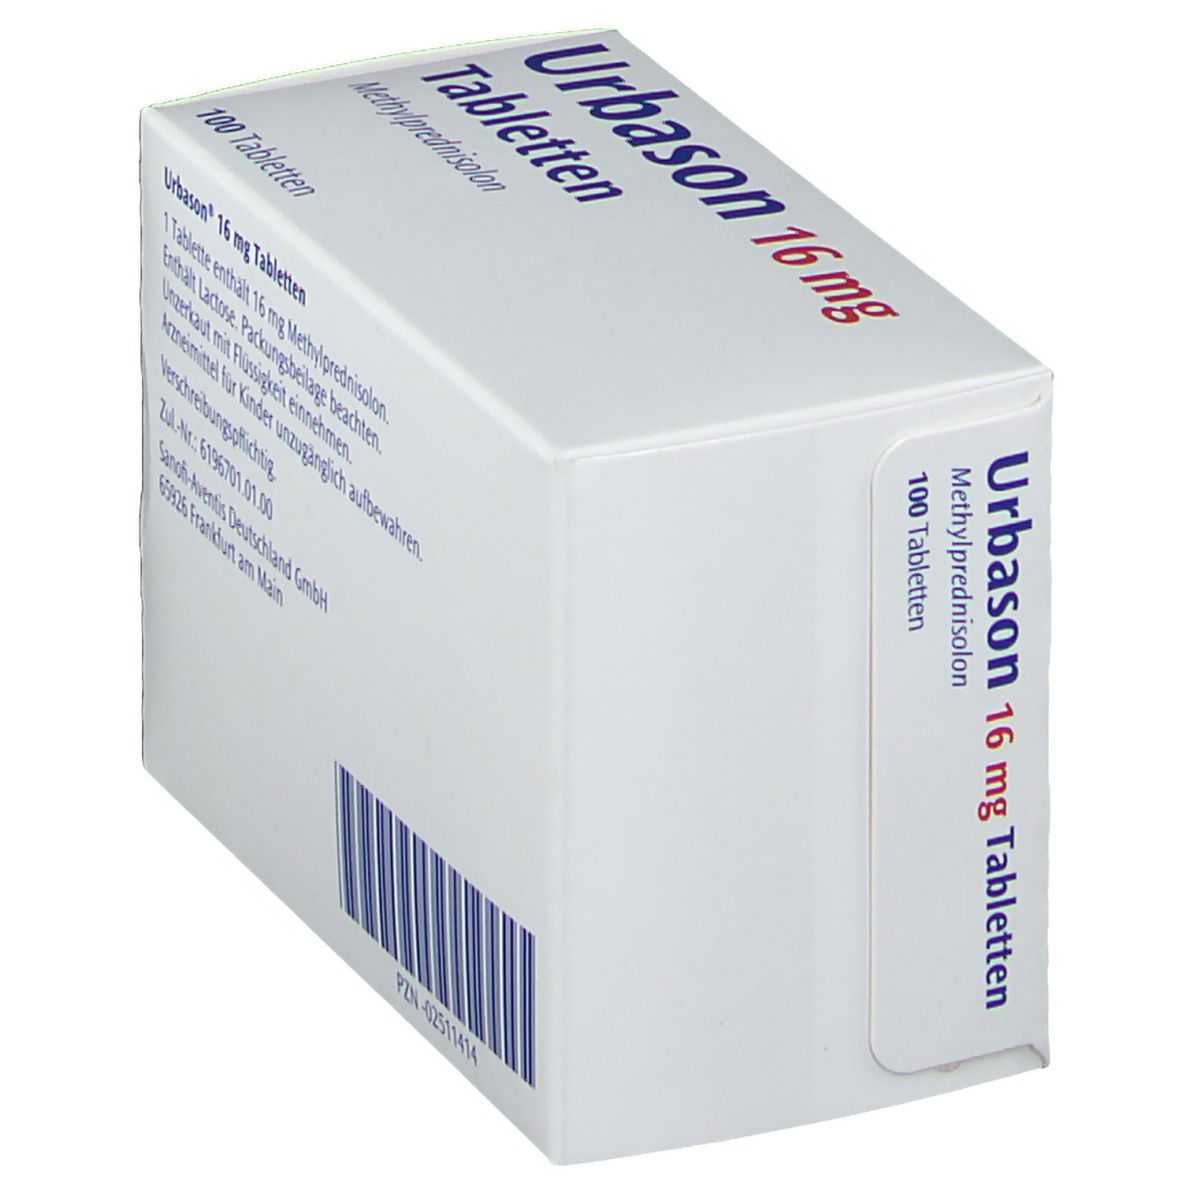 Urbason® 16 mg